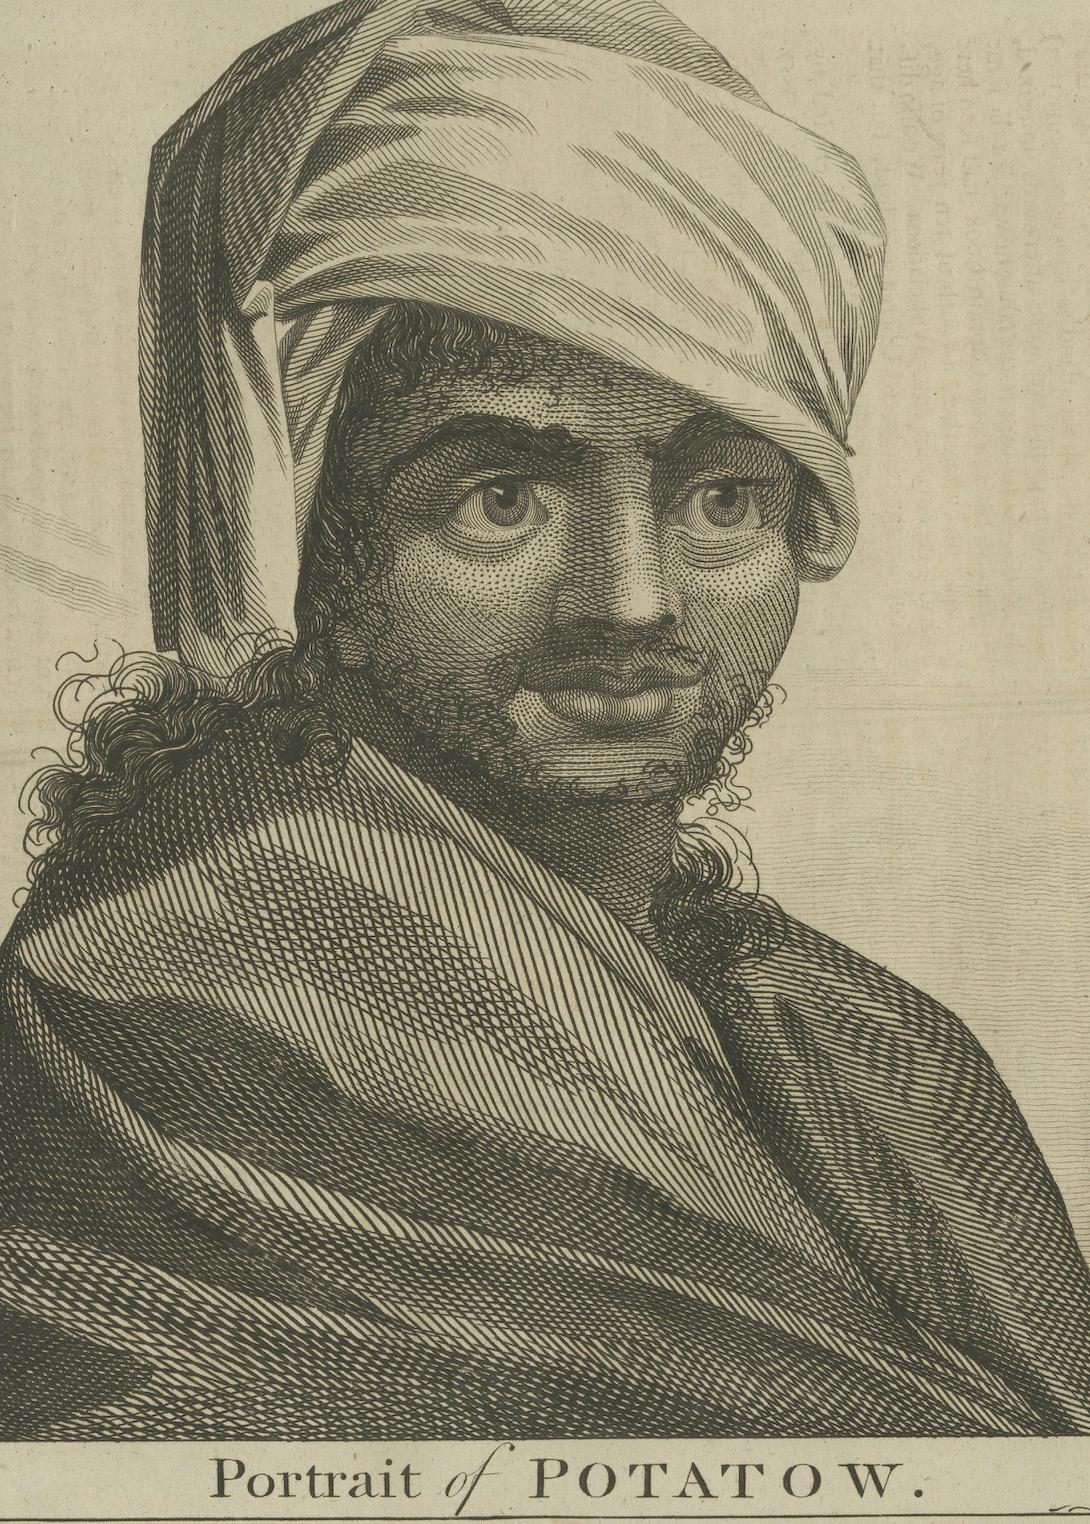 Papier Portraits d'un comte : « Chief Potatow and Omai of Tahiti », gravé vers 1777